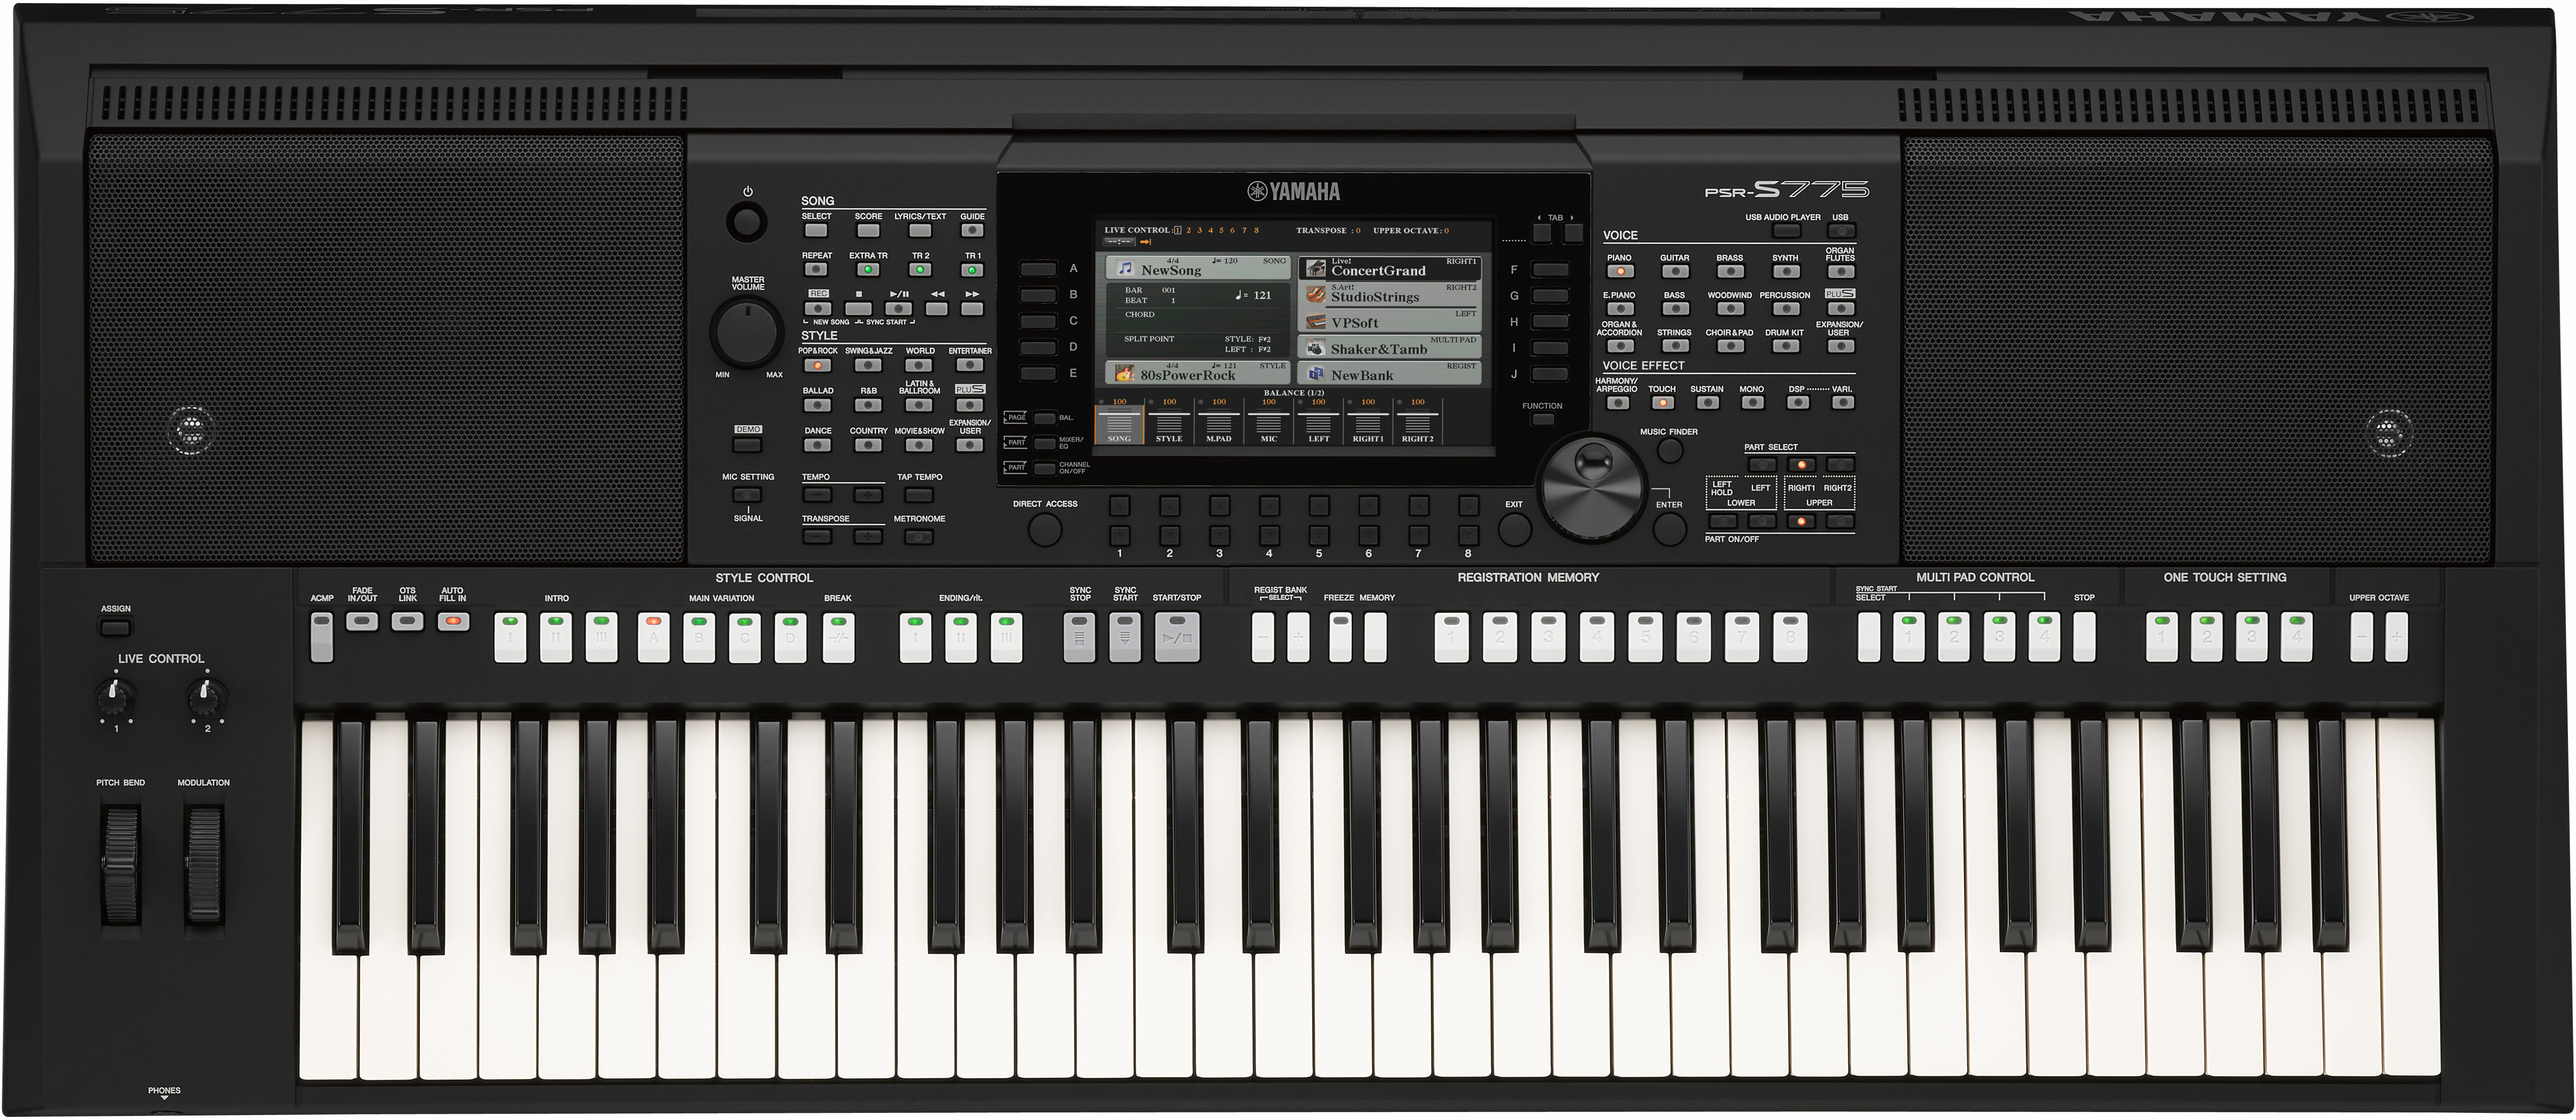 Yamaha Psr-s775 - Entertainer Keyboard - Main picture